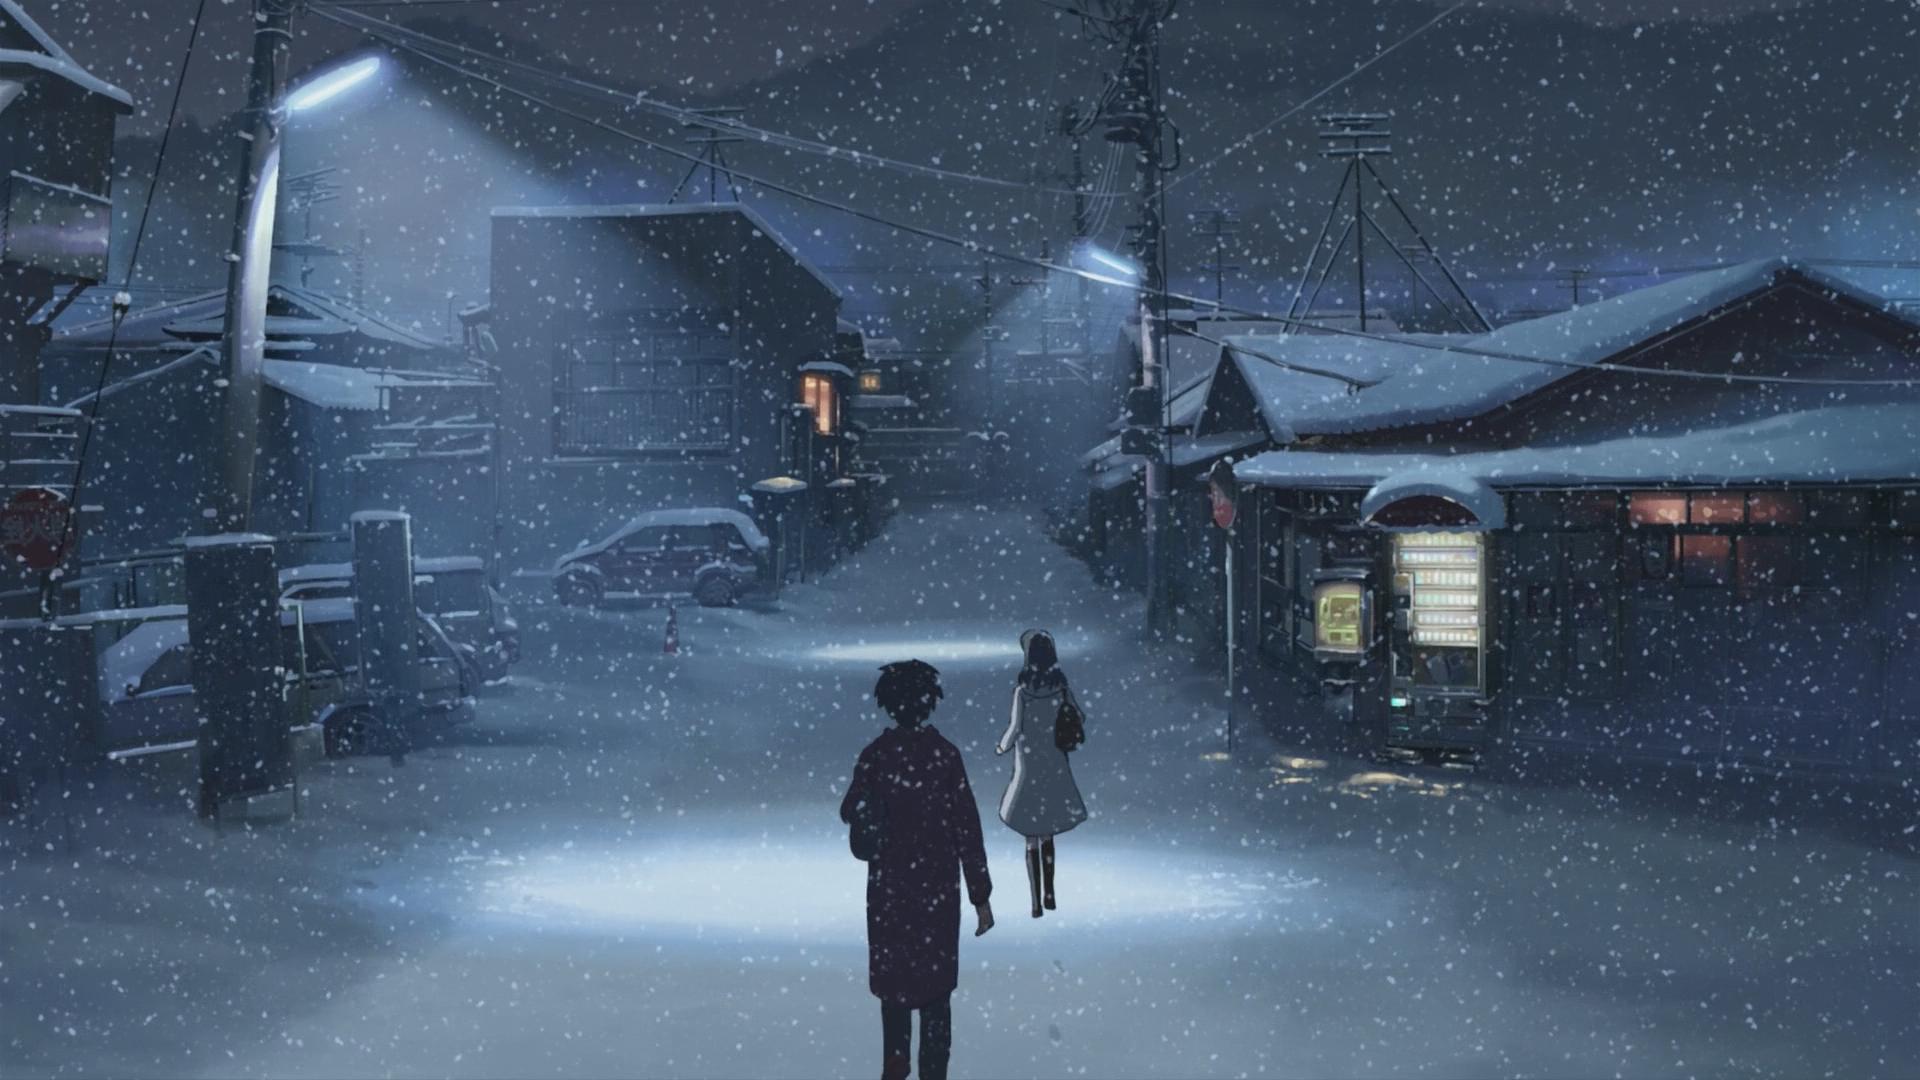 Japan Picks Top 10 Anime Theme Songs For Winter 2022 - Anime Galaxy